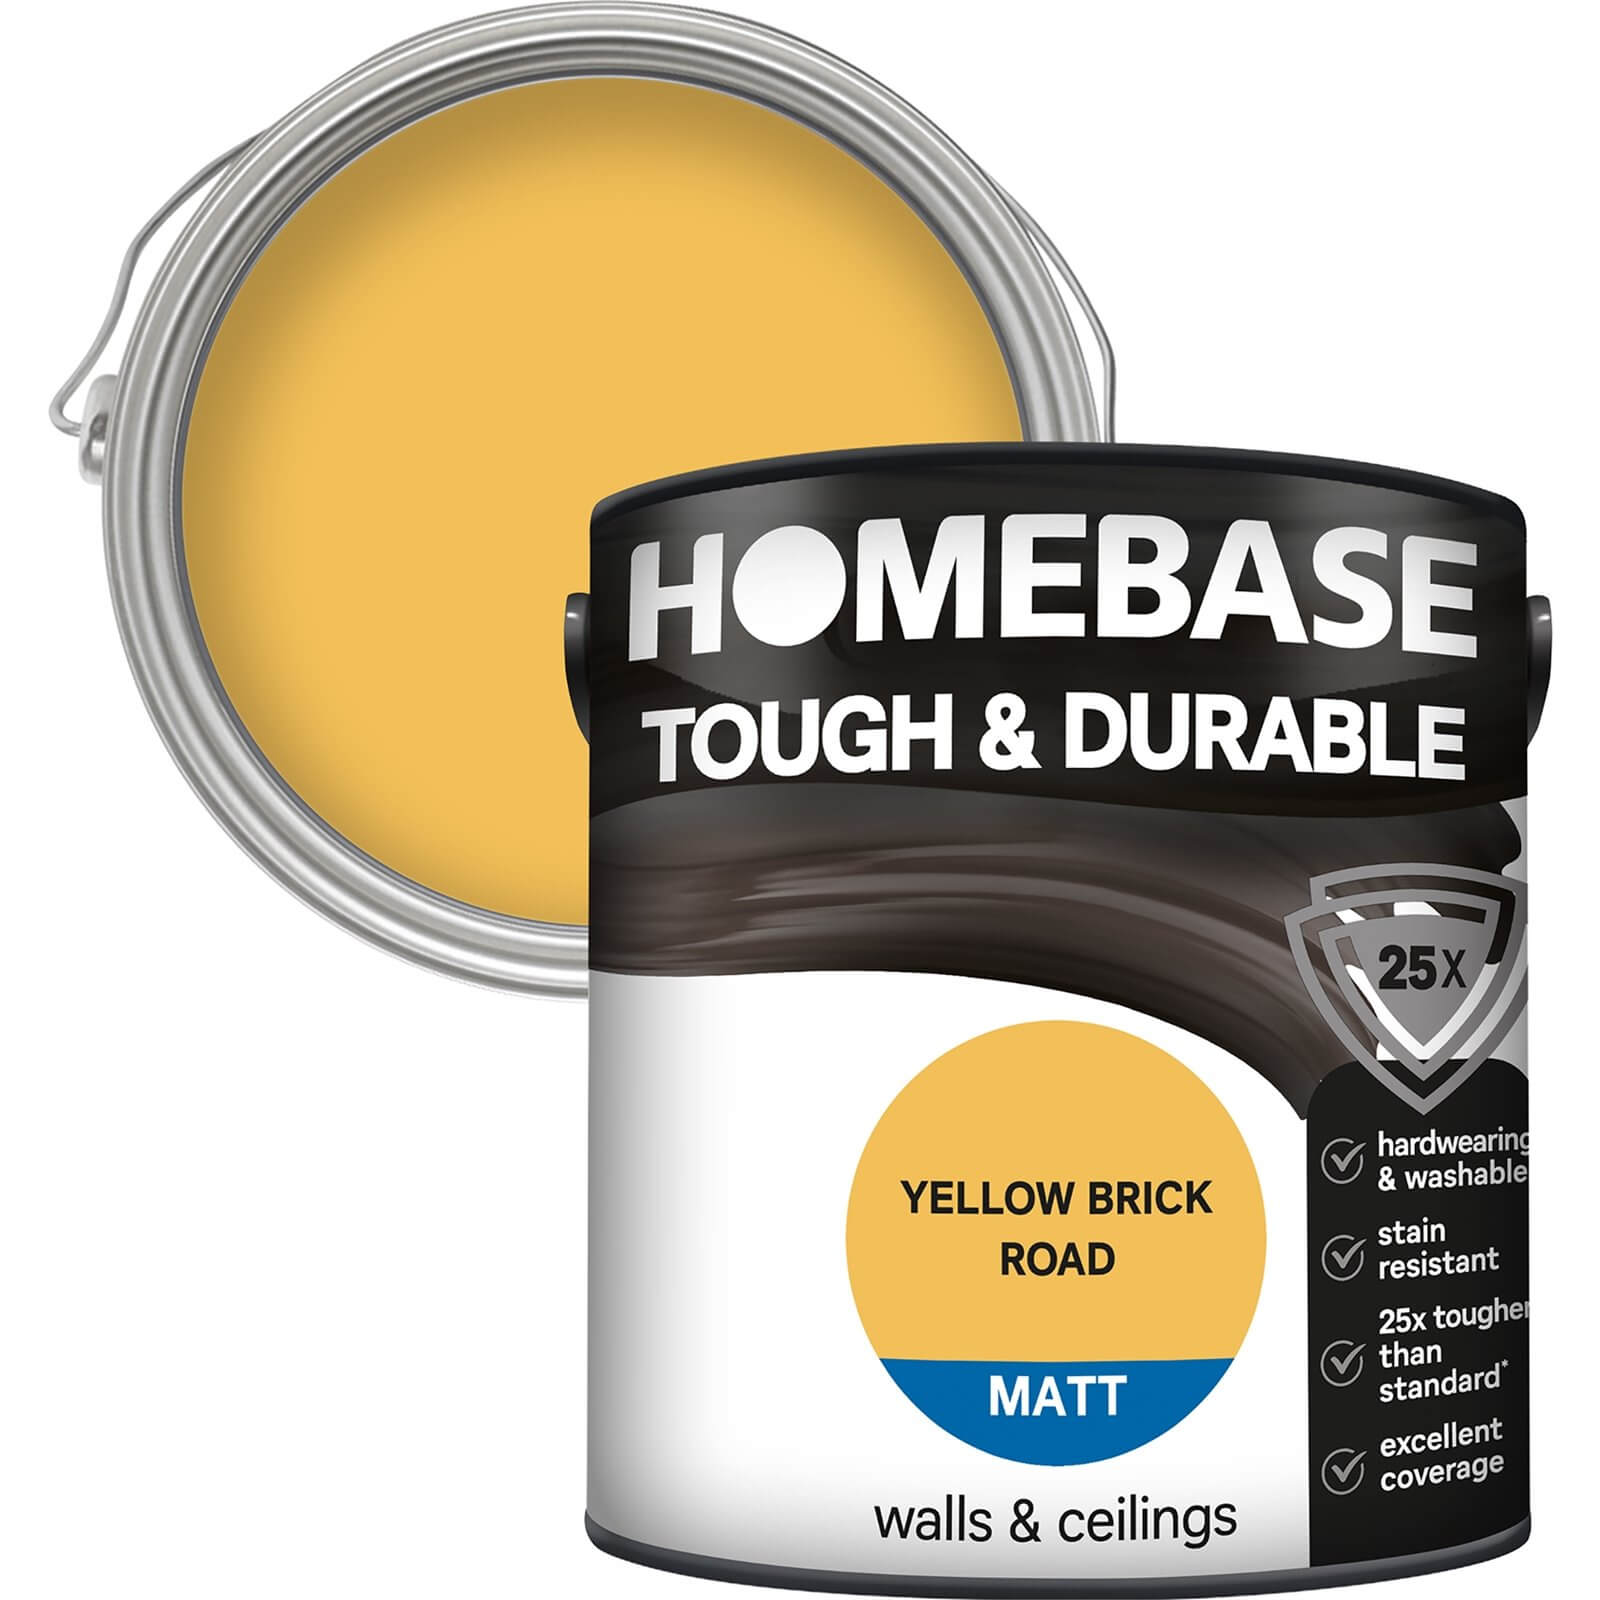 Photo of Homebase Tough & Durable Matt Paint - Yellow Brick Road 2.5l